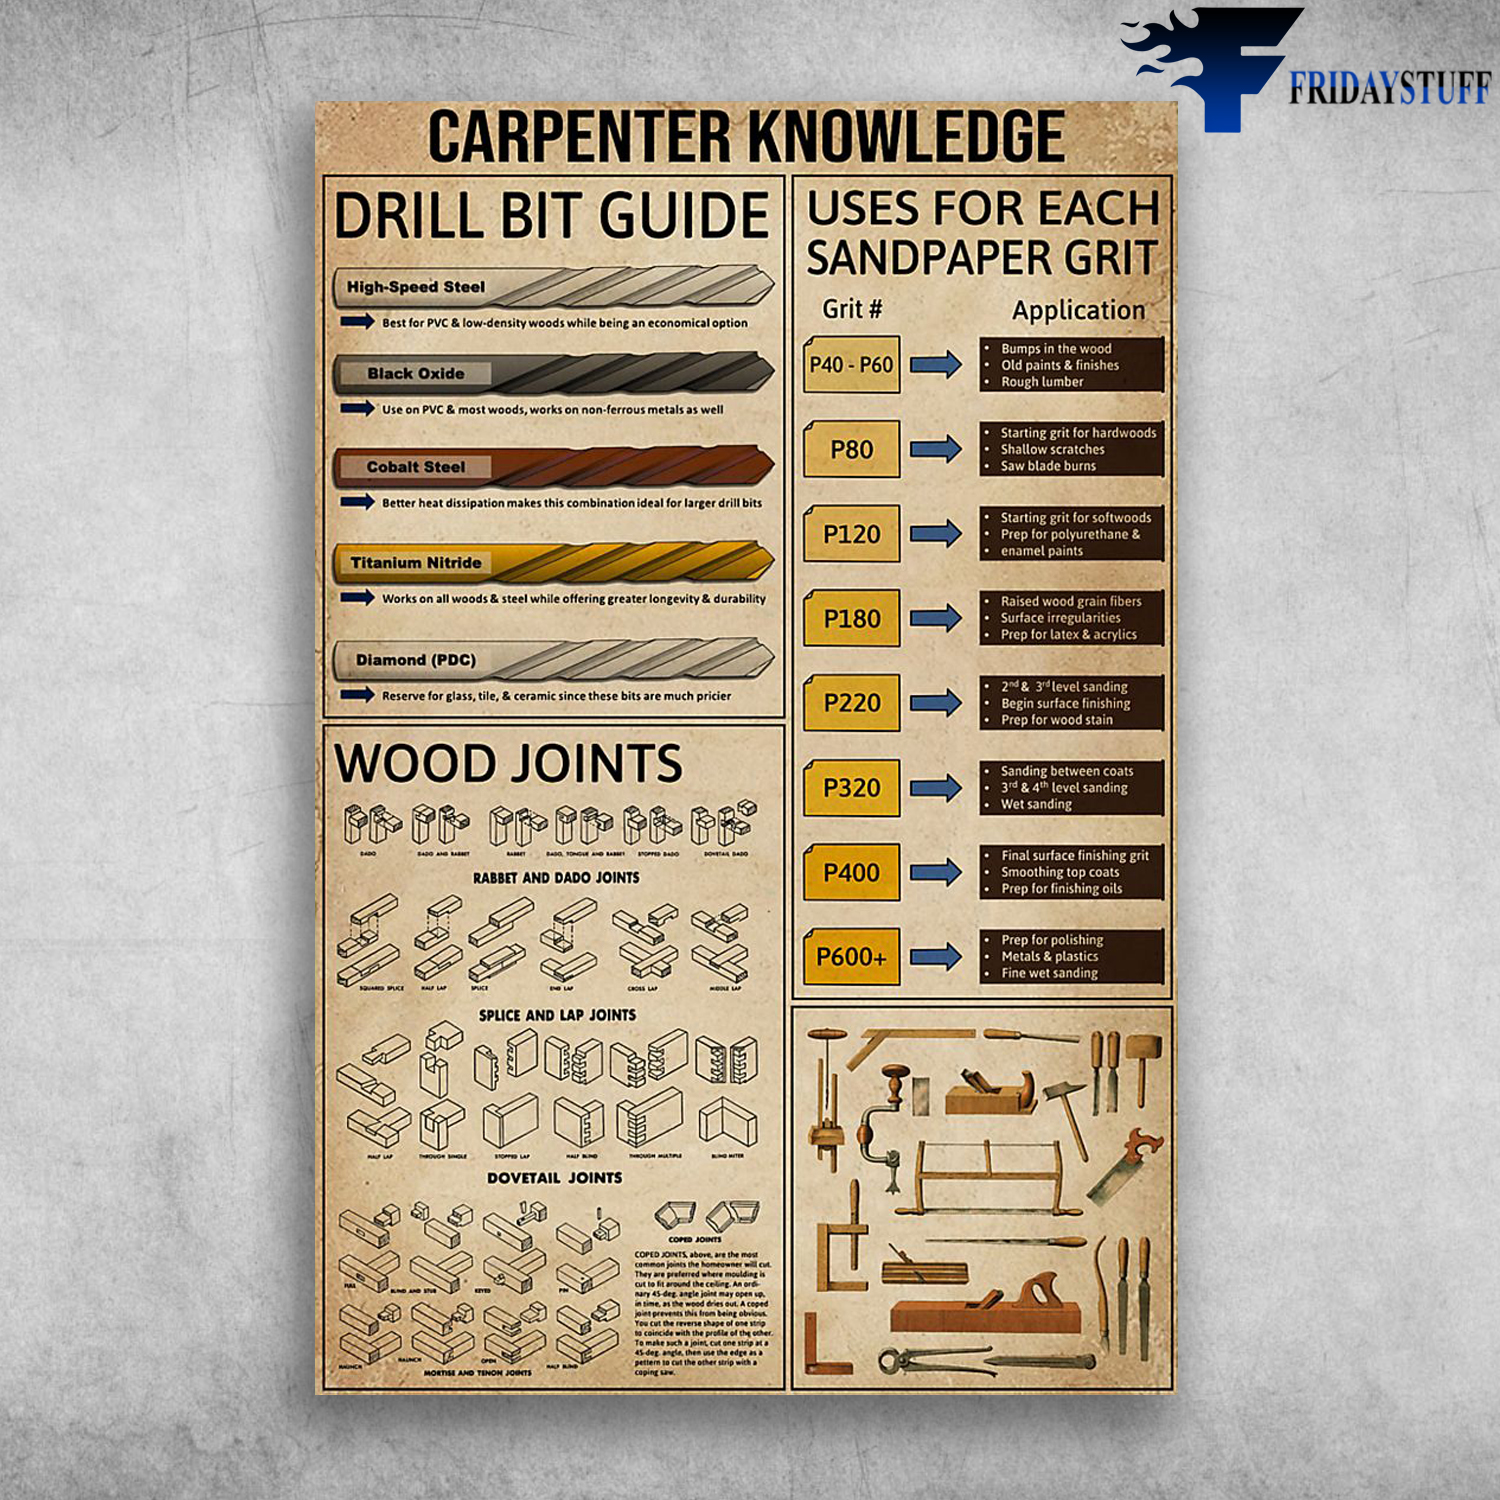 Carpenter Knowledge Uses For Each Sandpaper Grit